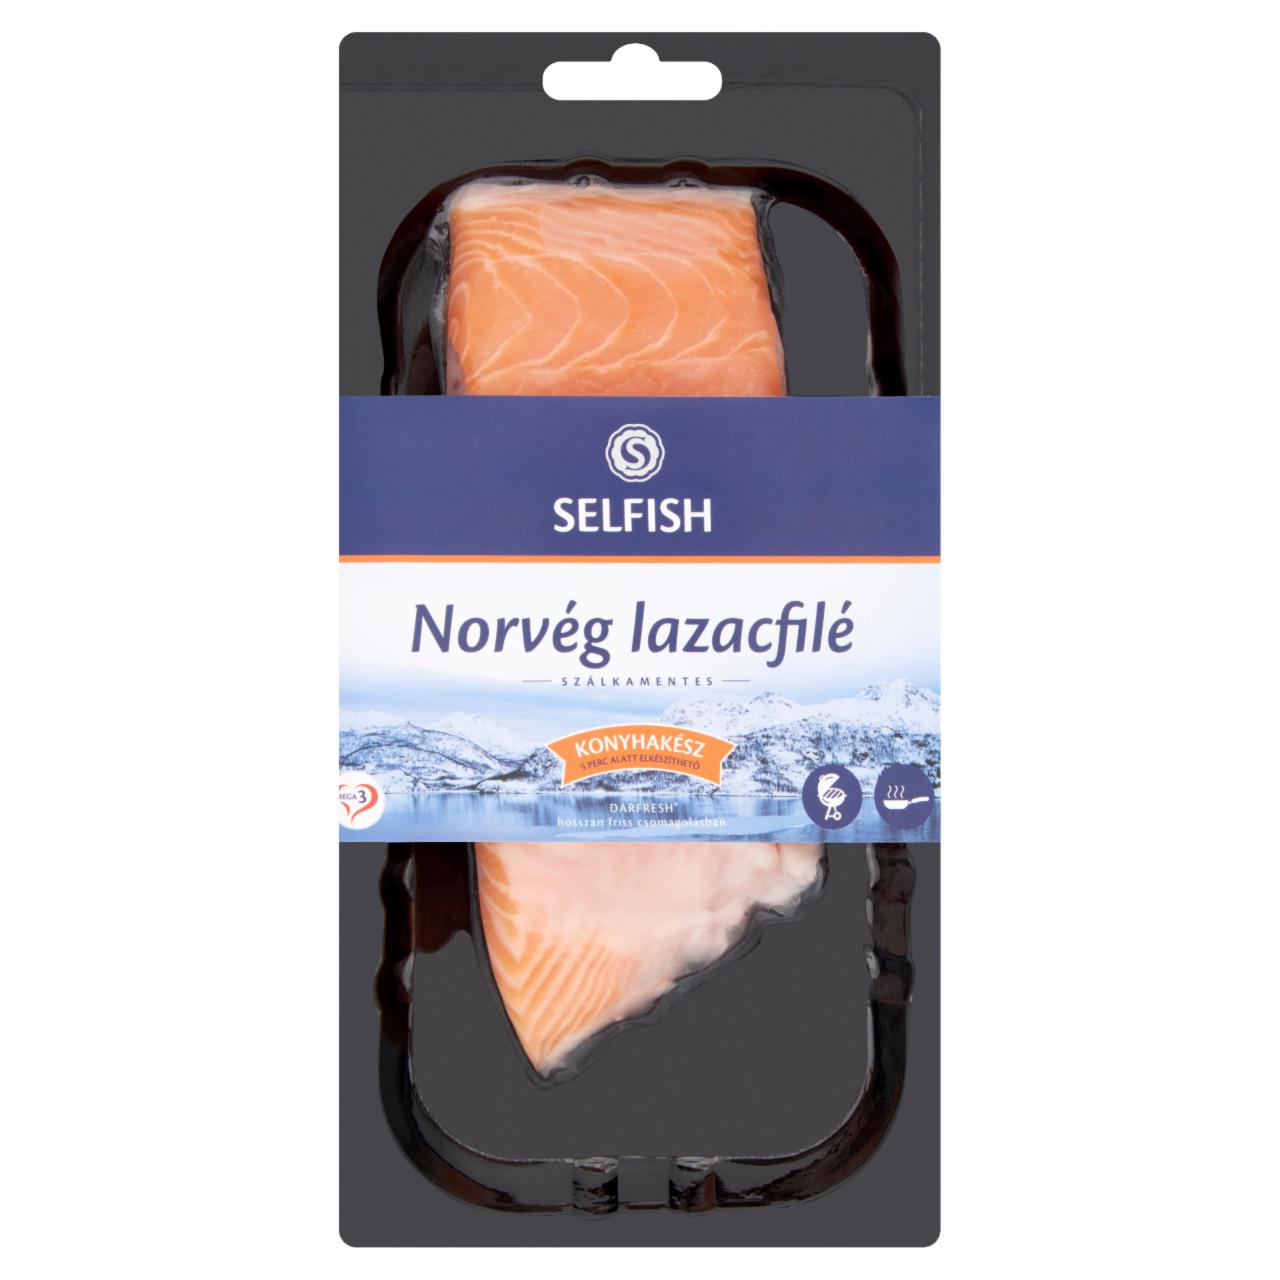 Képek - Selfish norvég lazacfilé 160 g